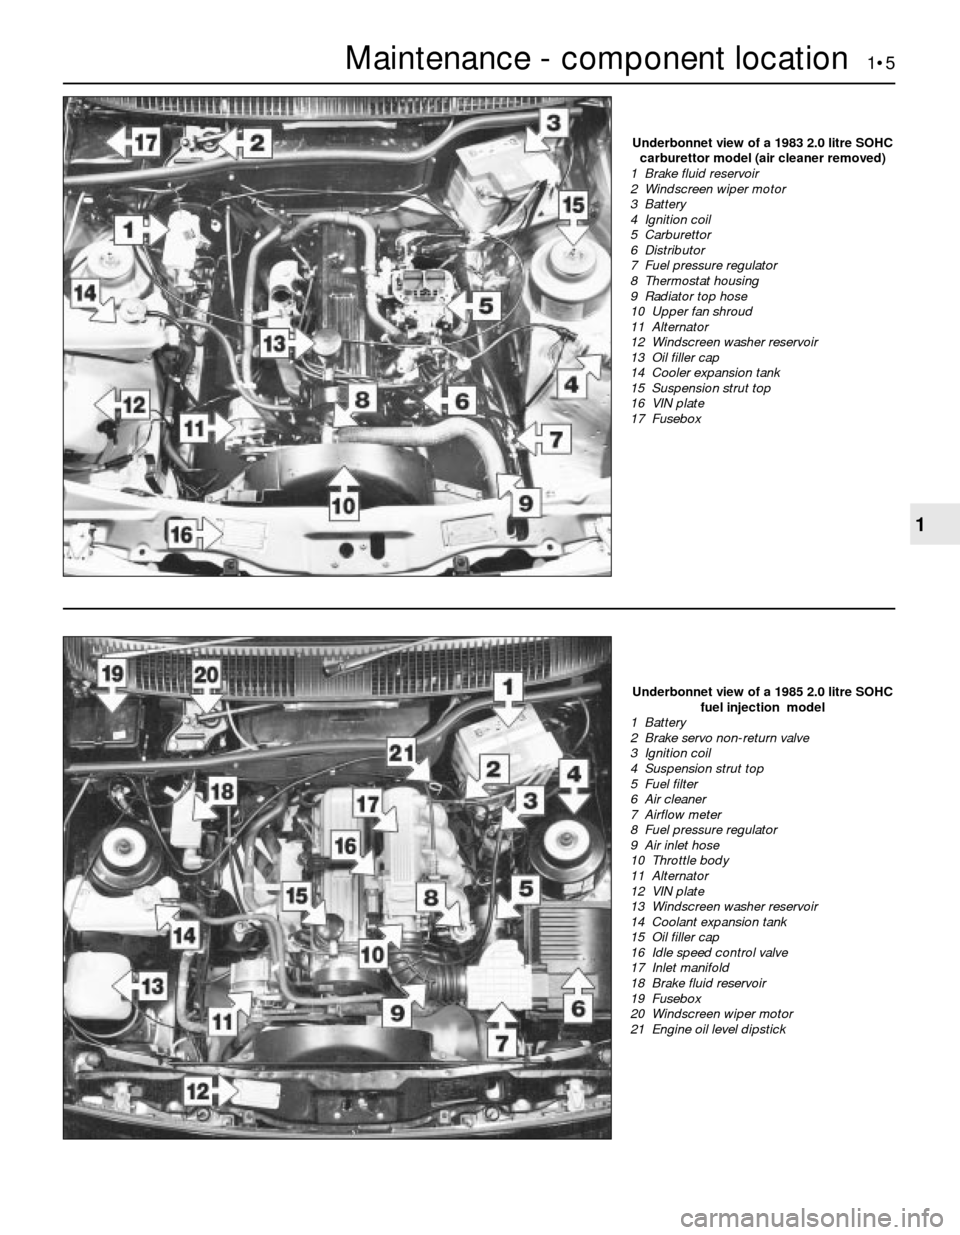 FORD SIERRA 1989 2.G Routine Manintenance And Servicing Workshop Manual Maintenance - component location  1•5
1
Underbonnet view of a 1985 2.0 litre SOHC
fuel injection  model
1  Battery
2  Brake servo non-return valve
3  Ignition coil
4  Suspension strut top
5  Fuel fi